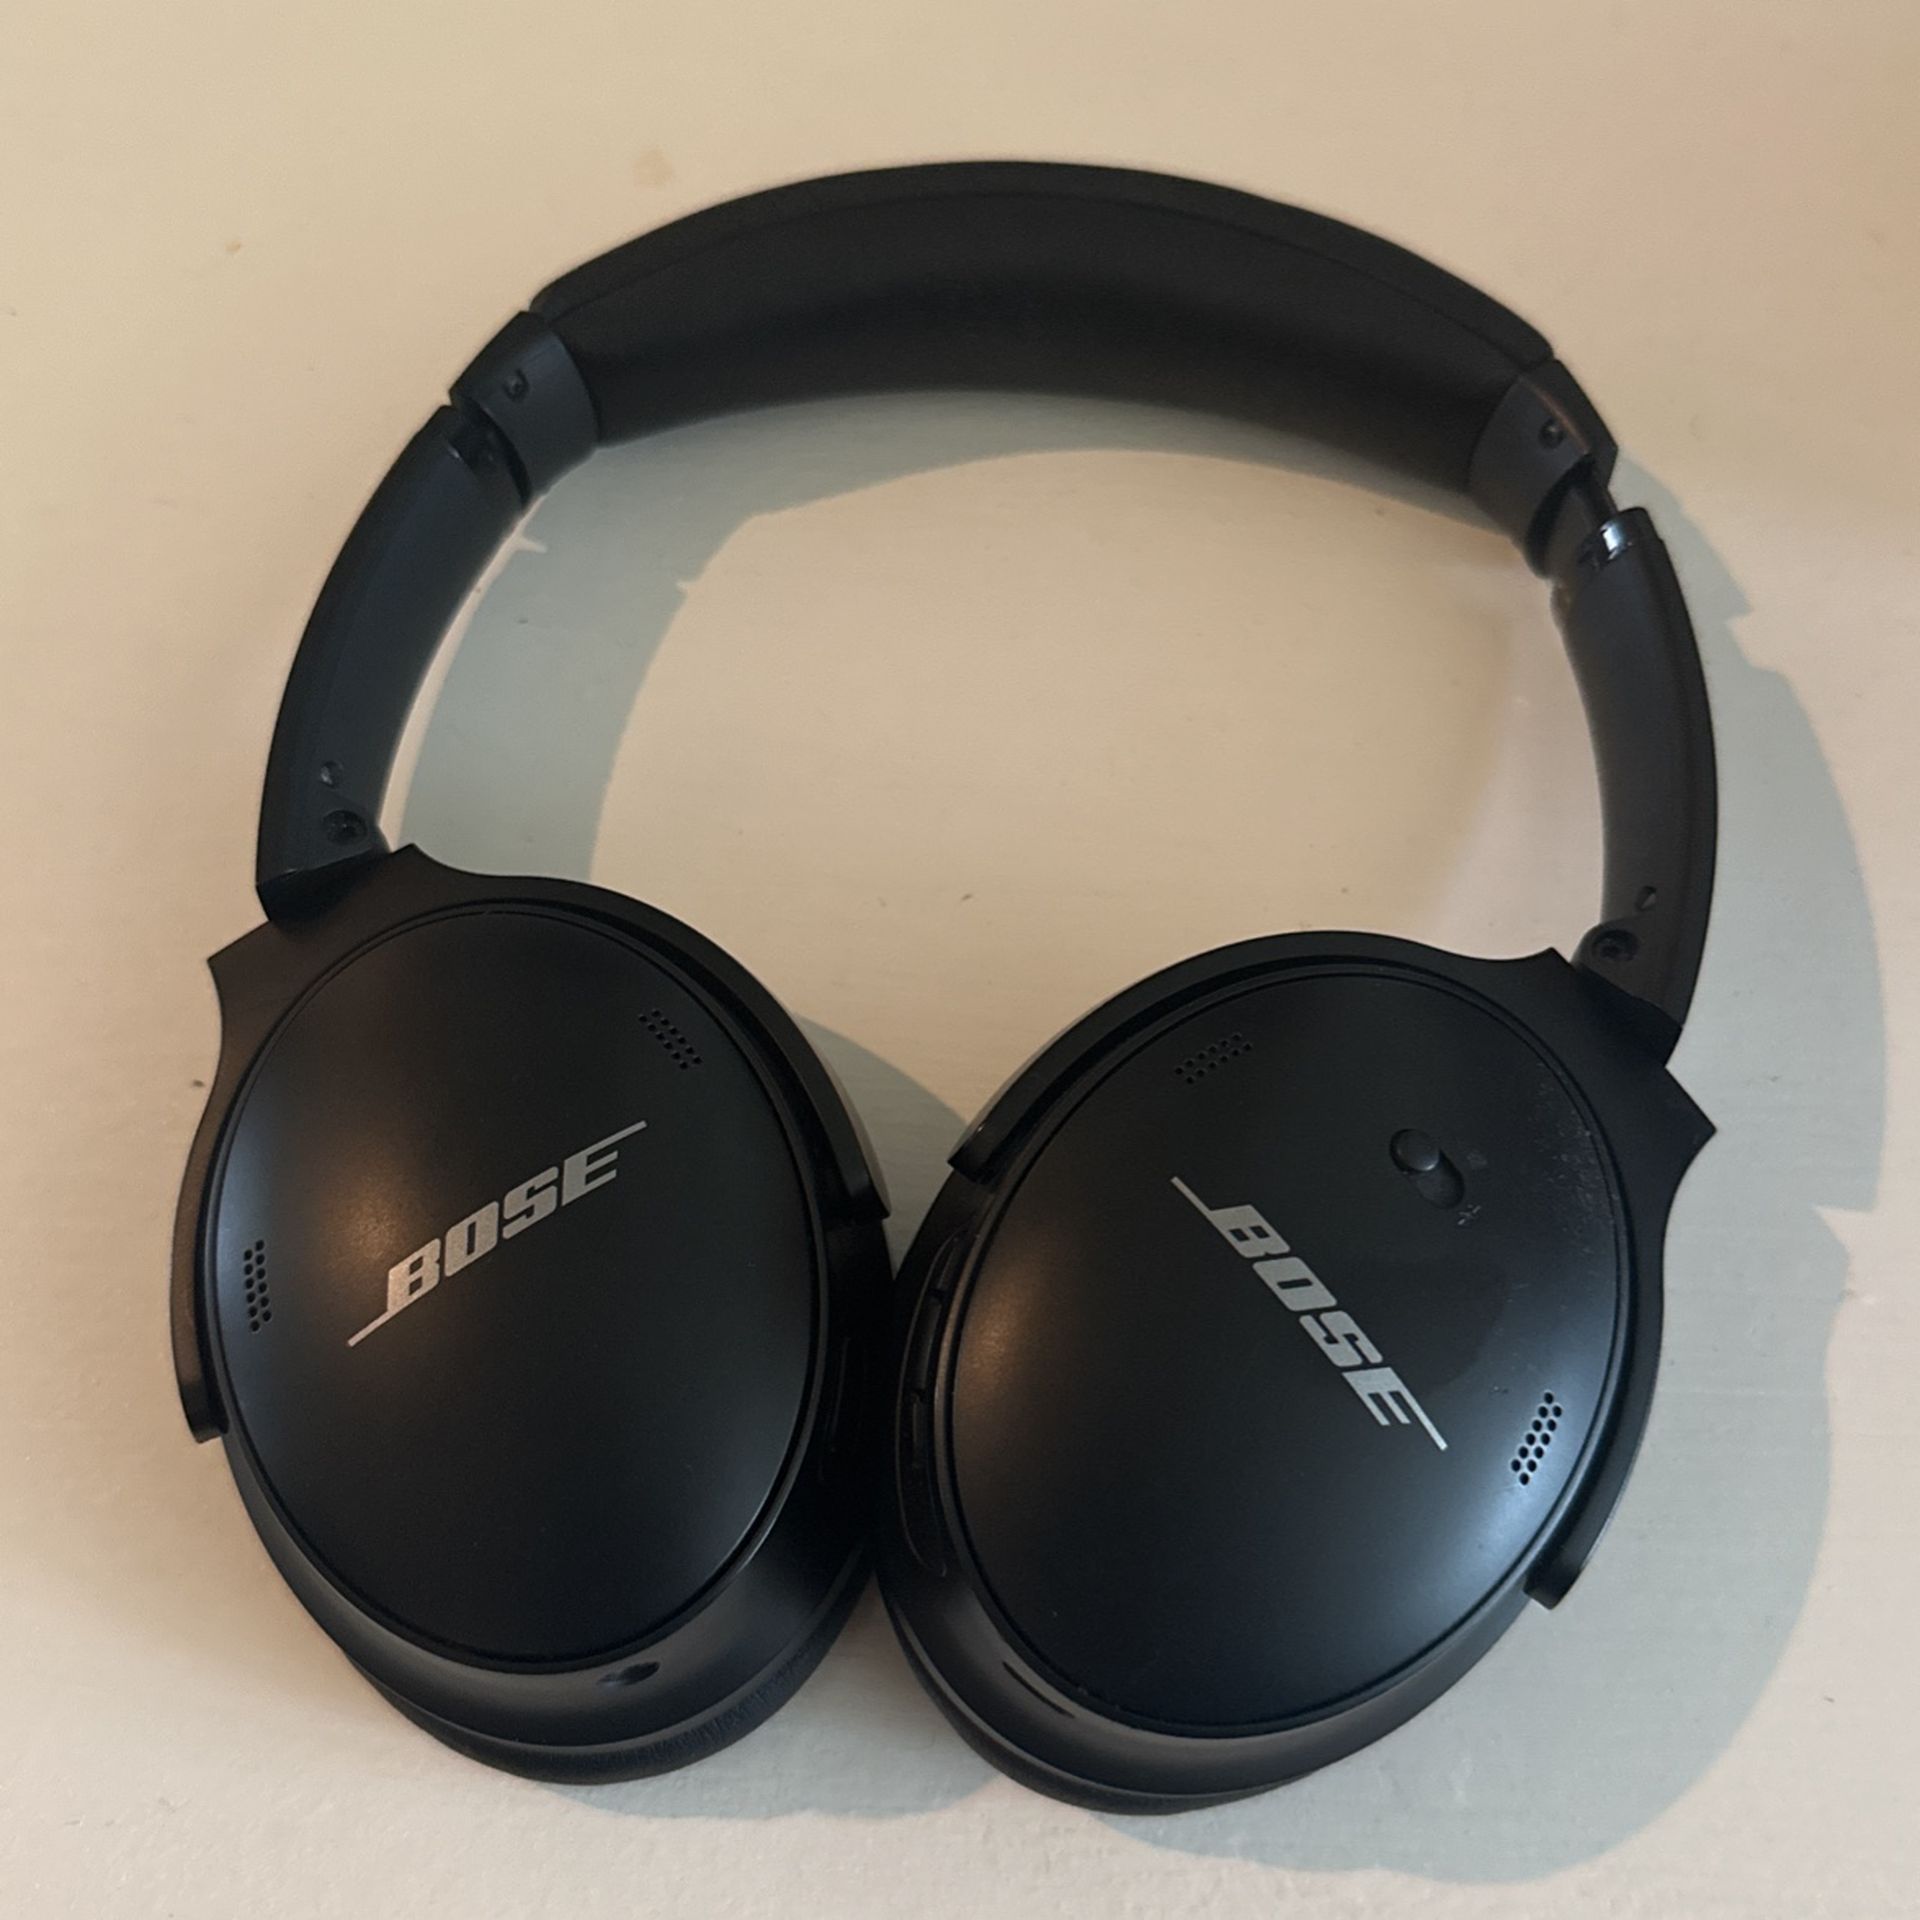 Bose Wireless Noise Cancellation Headphones